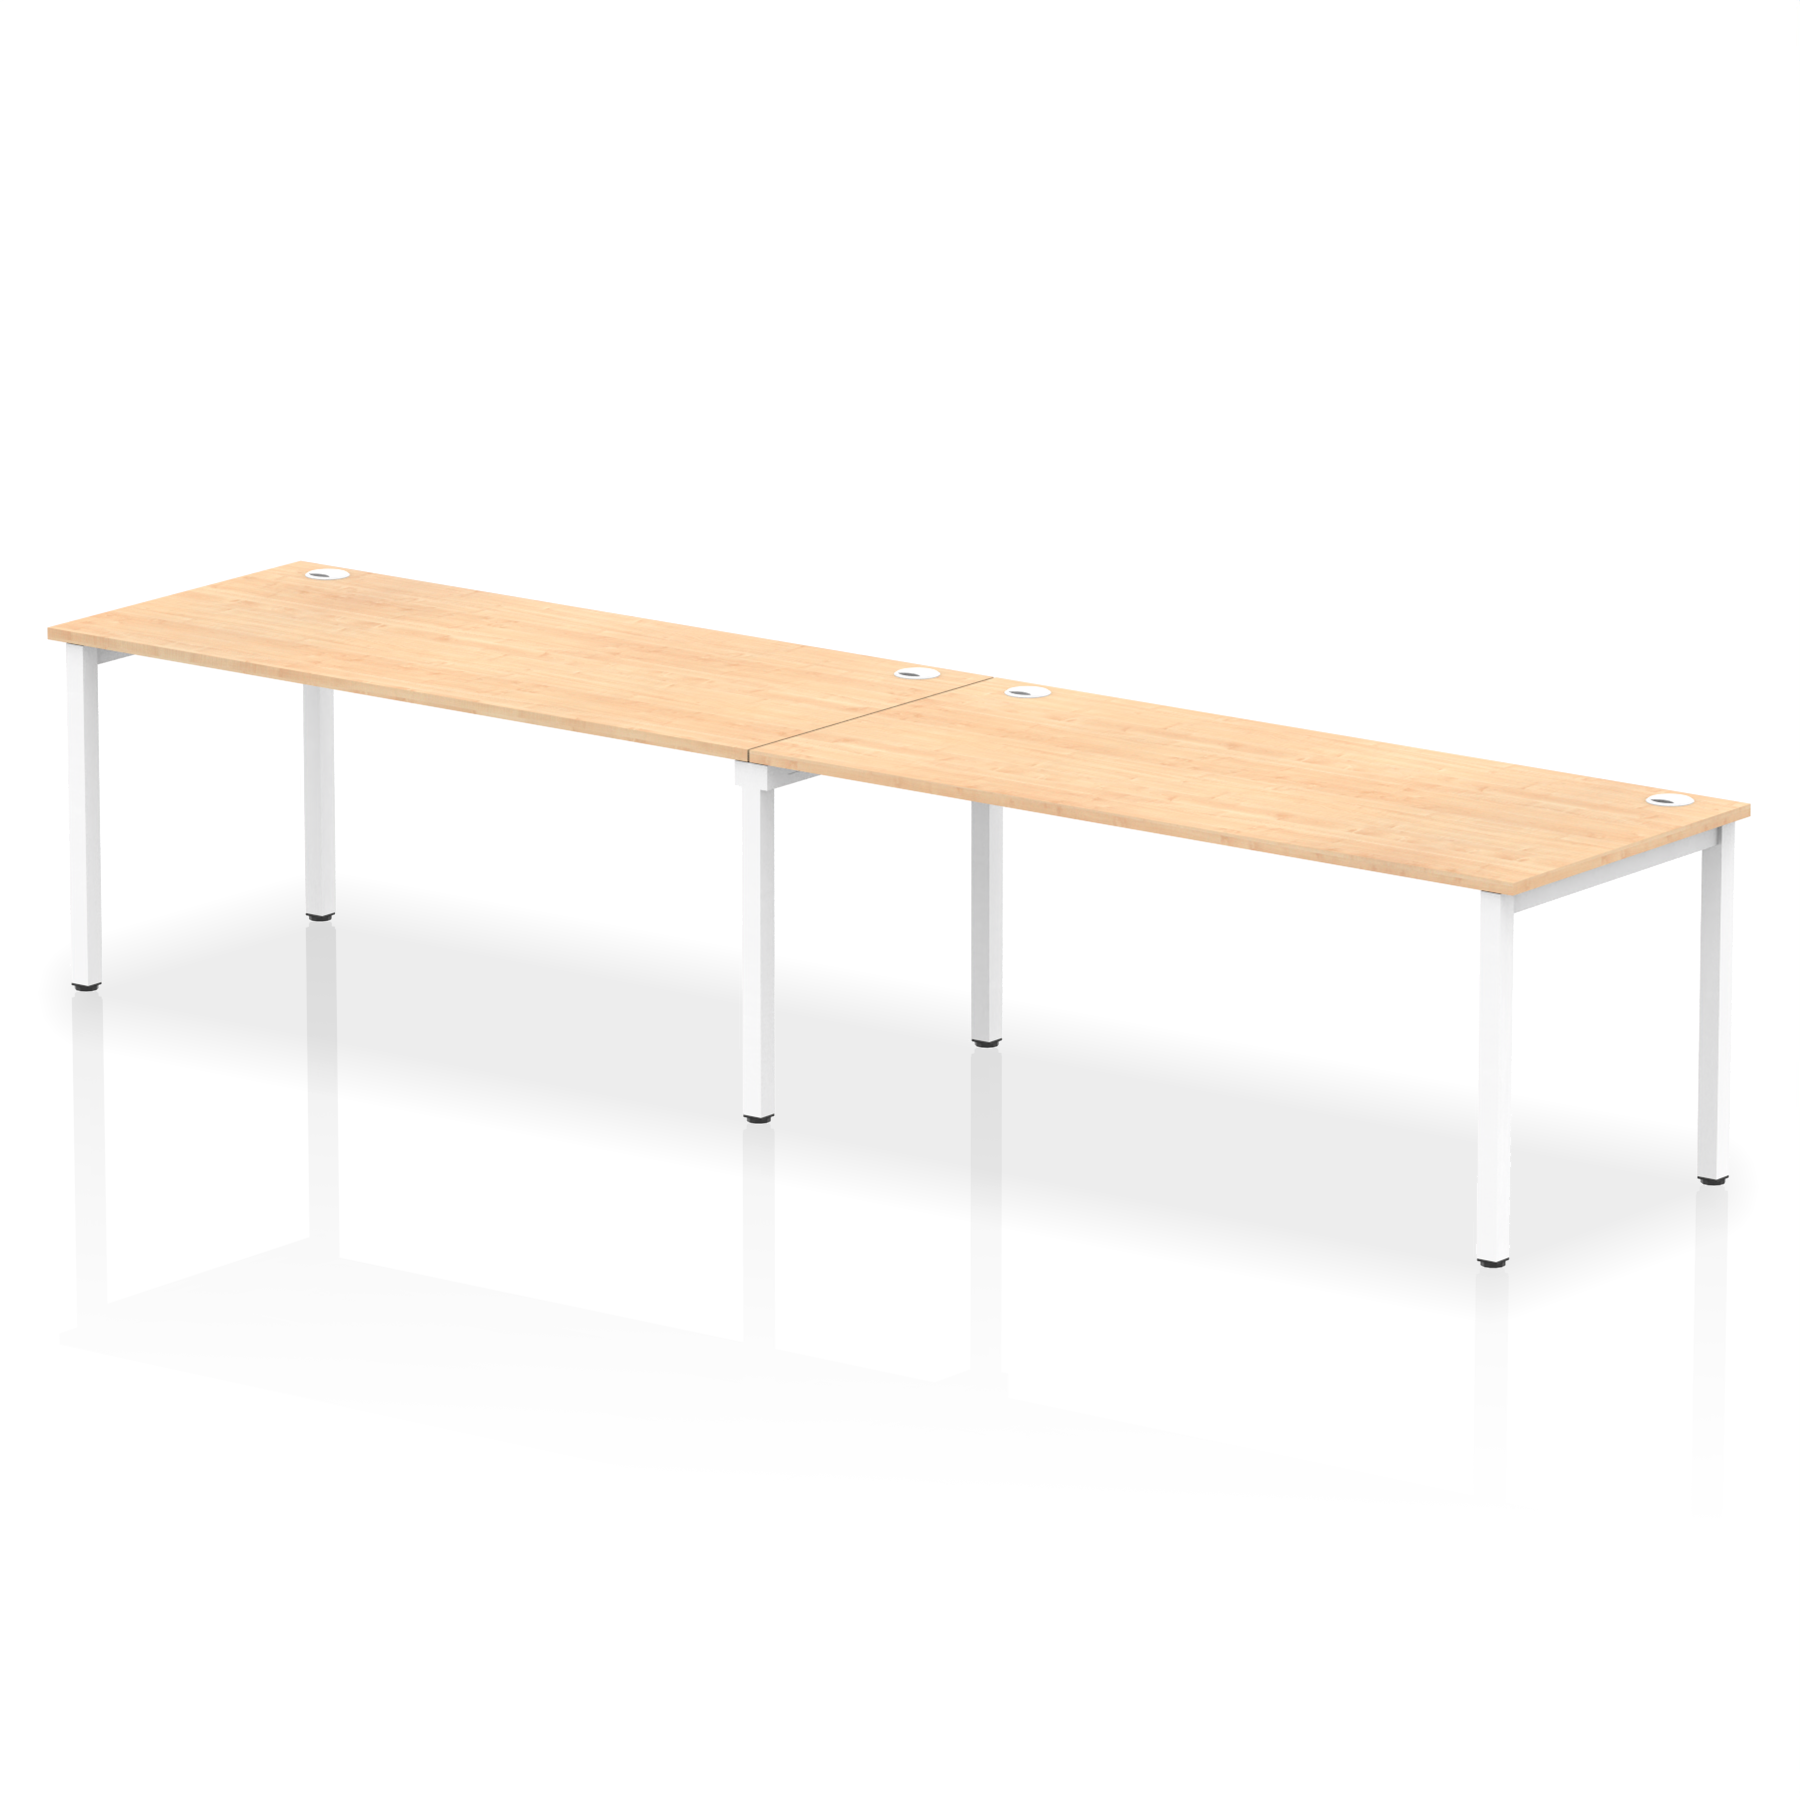 Impulse Single Row Bench Desk - 2 Person